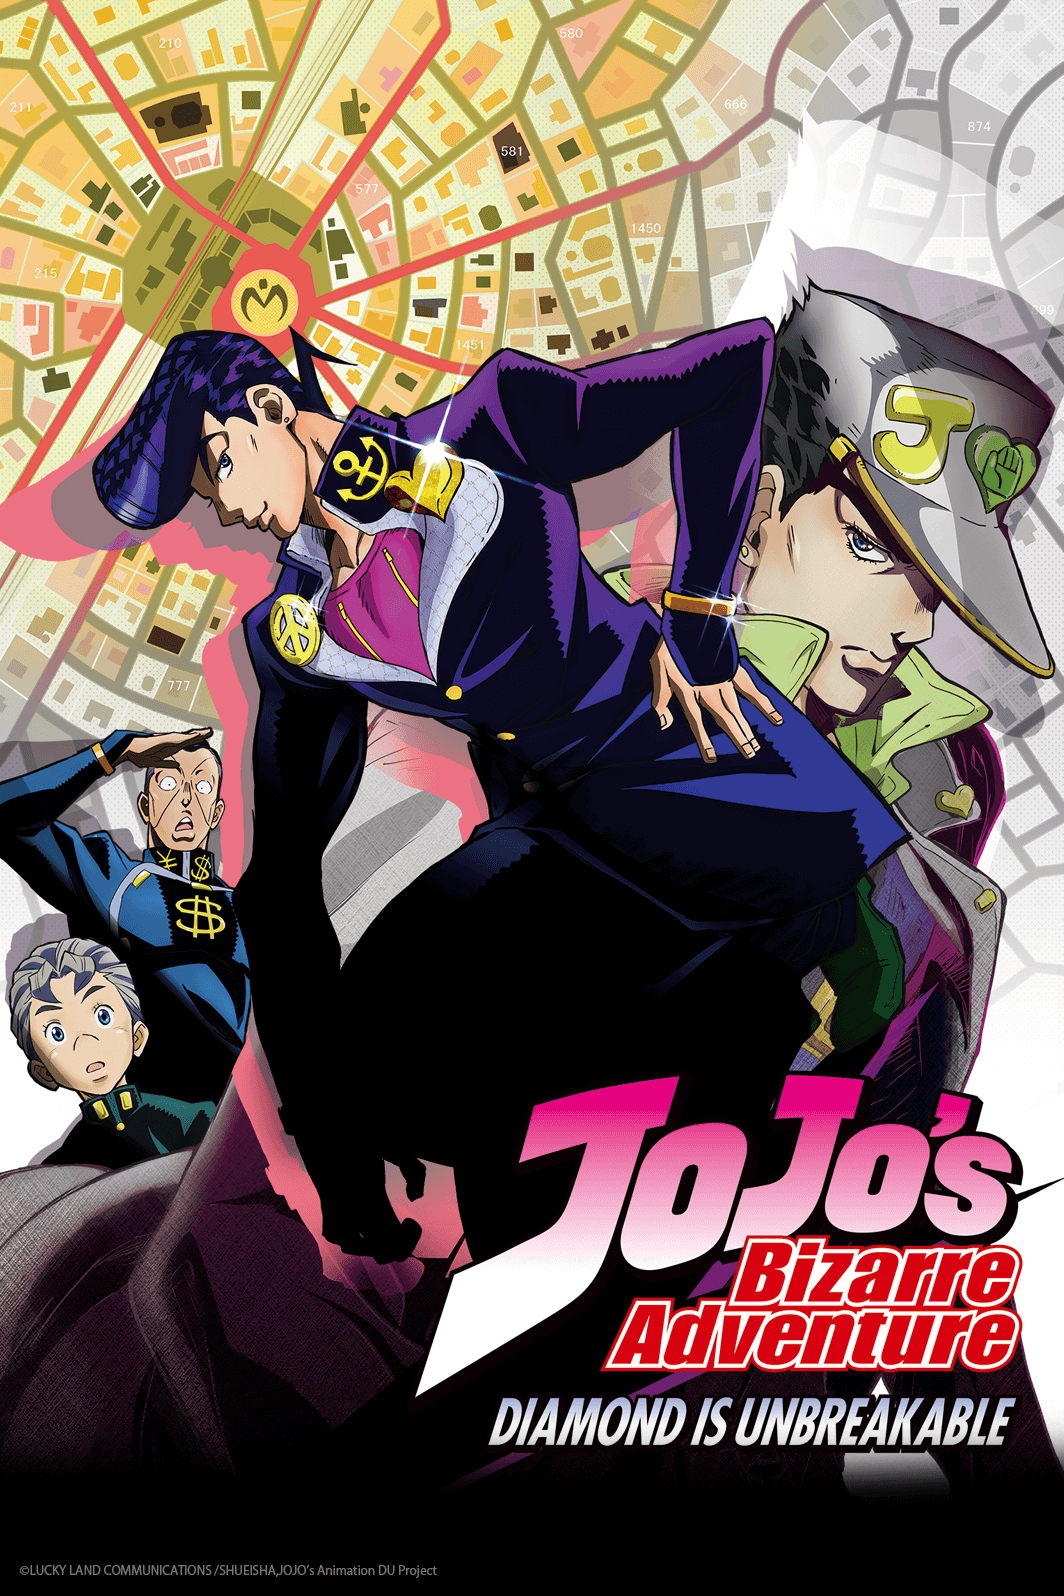 JoJo's Bizarre Adventure Manga Part 9 'The JOJOLands' Debuts on February 17  - News - Anime News Network